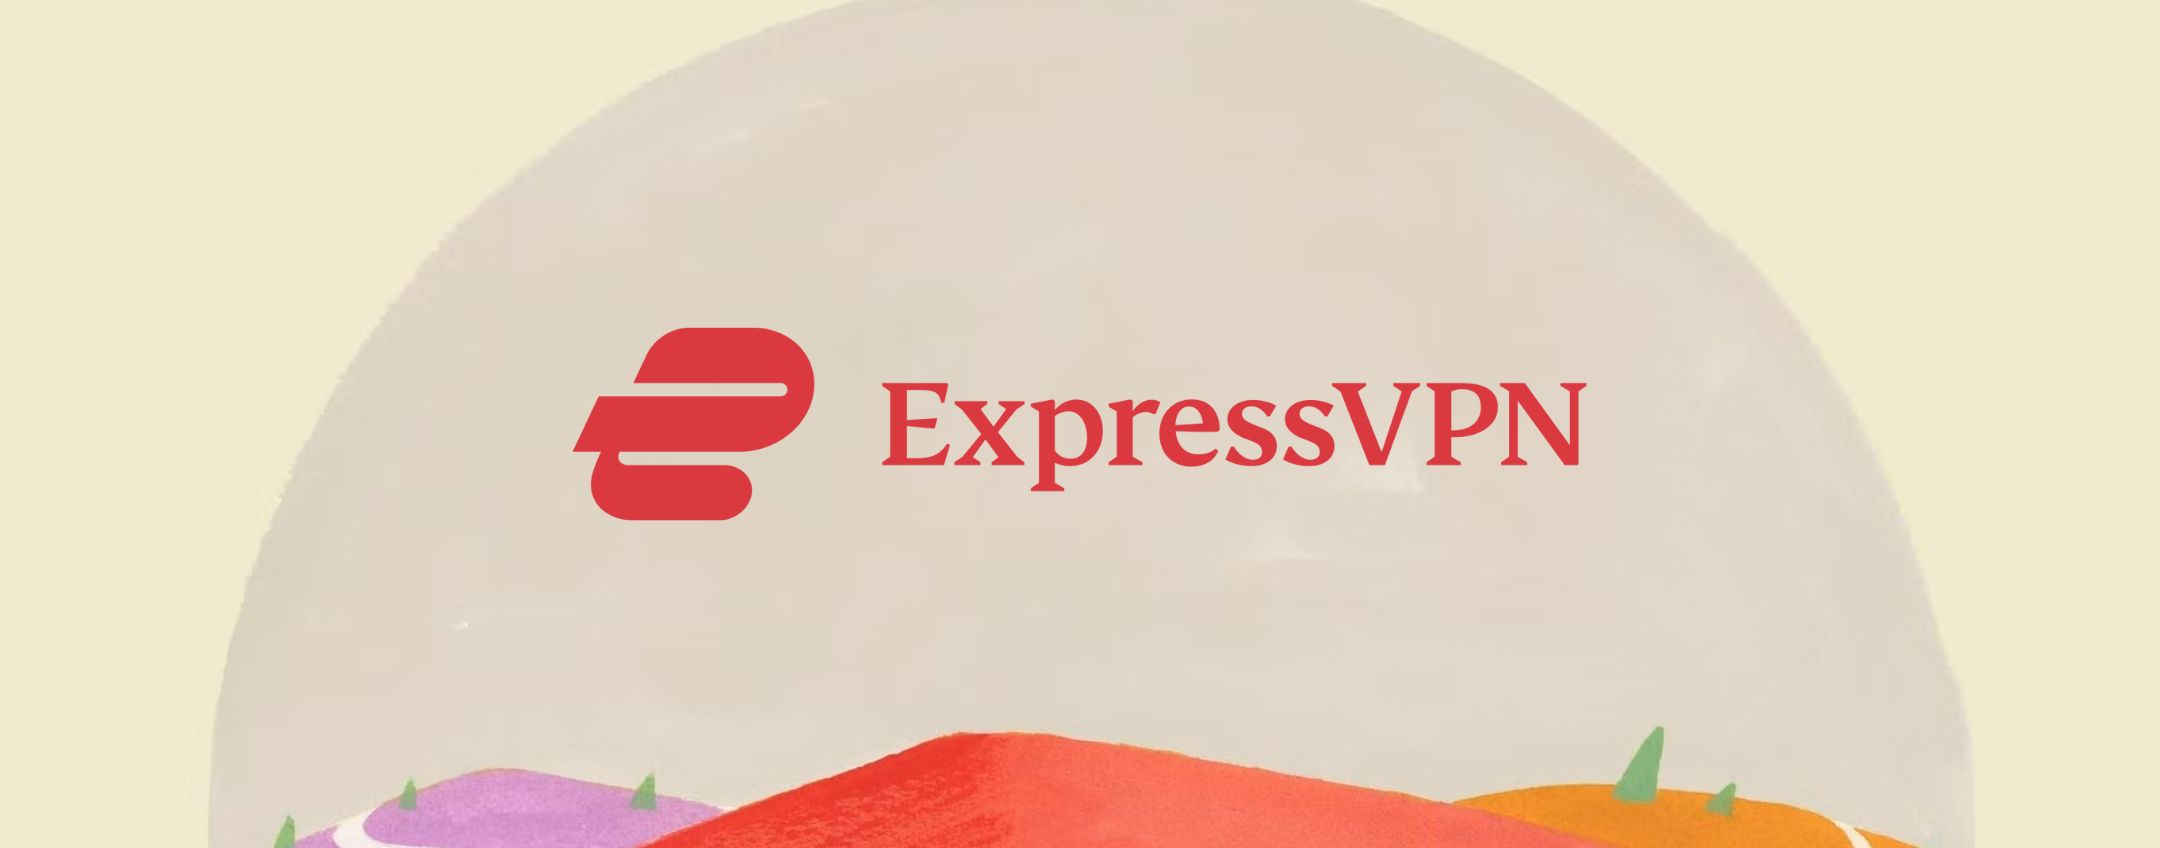 ExpressVPN nuova offerta annuale